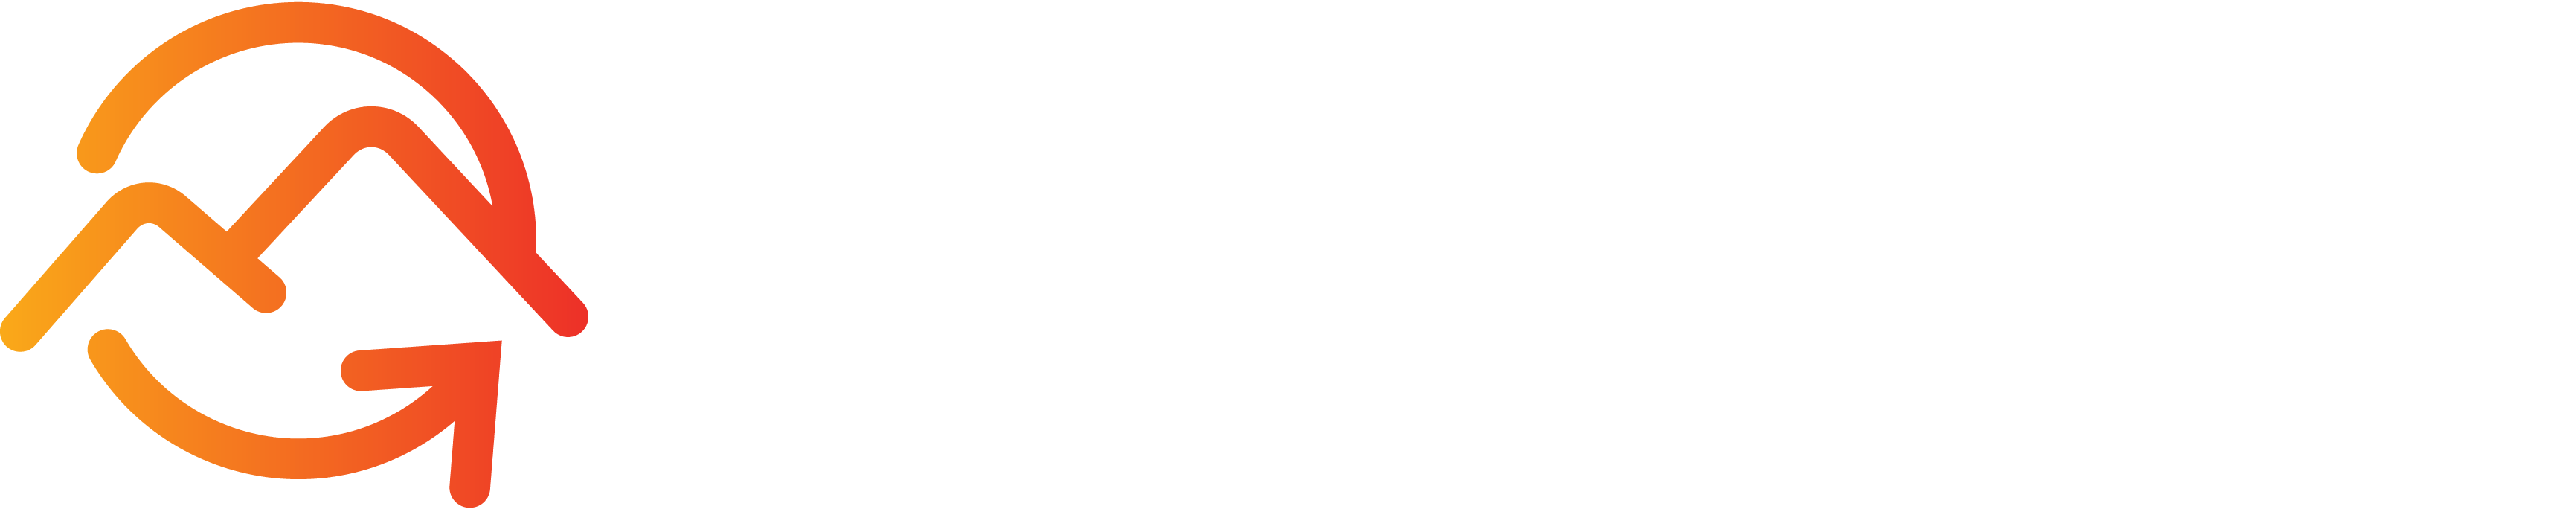 bulkbookers-logo-wit-rgb_Tekengebied 1